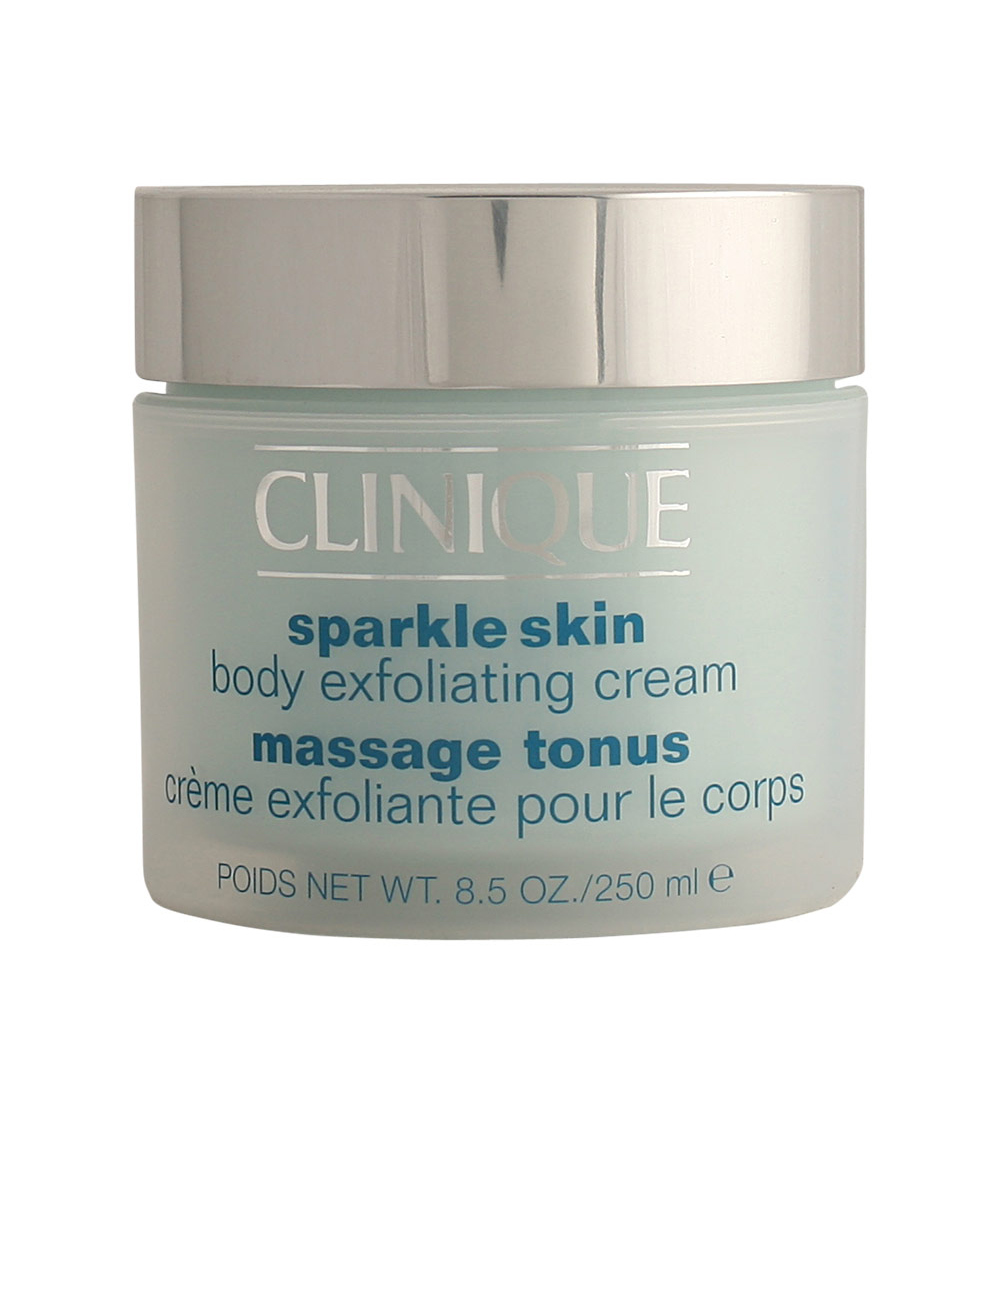 Clinique sparkle skin body exfoliating cream